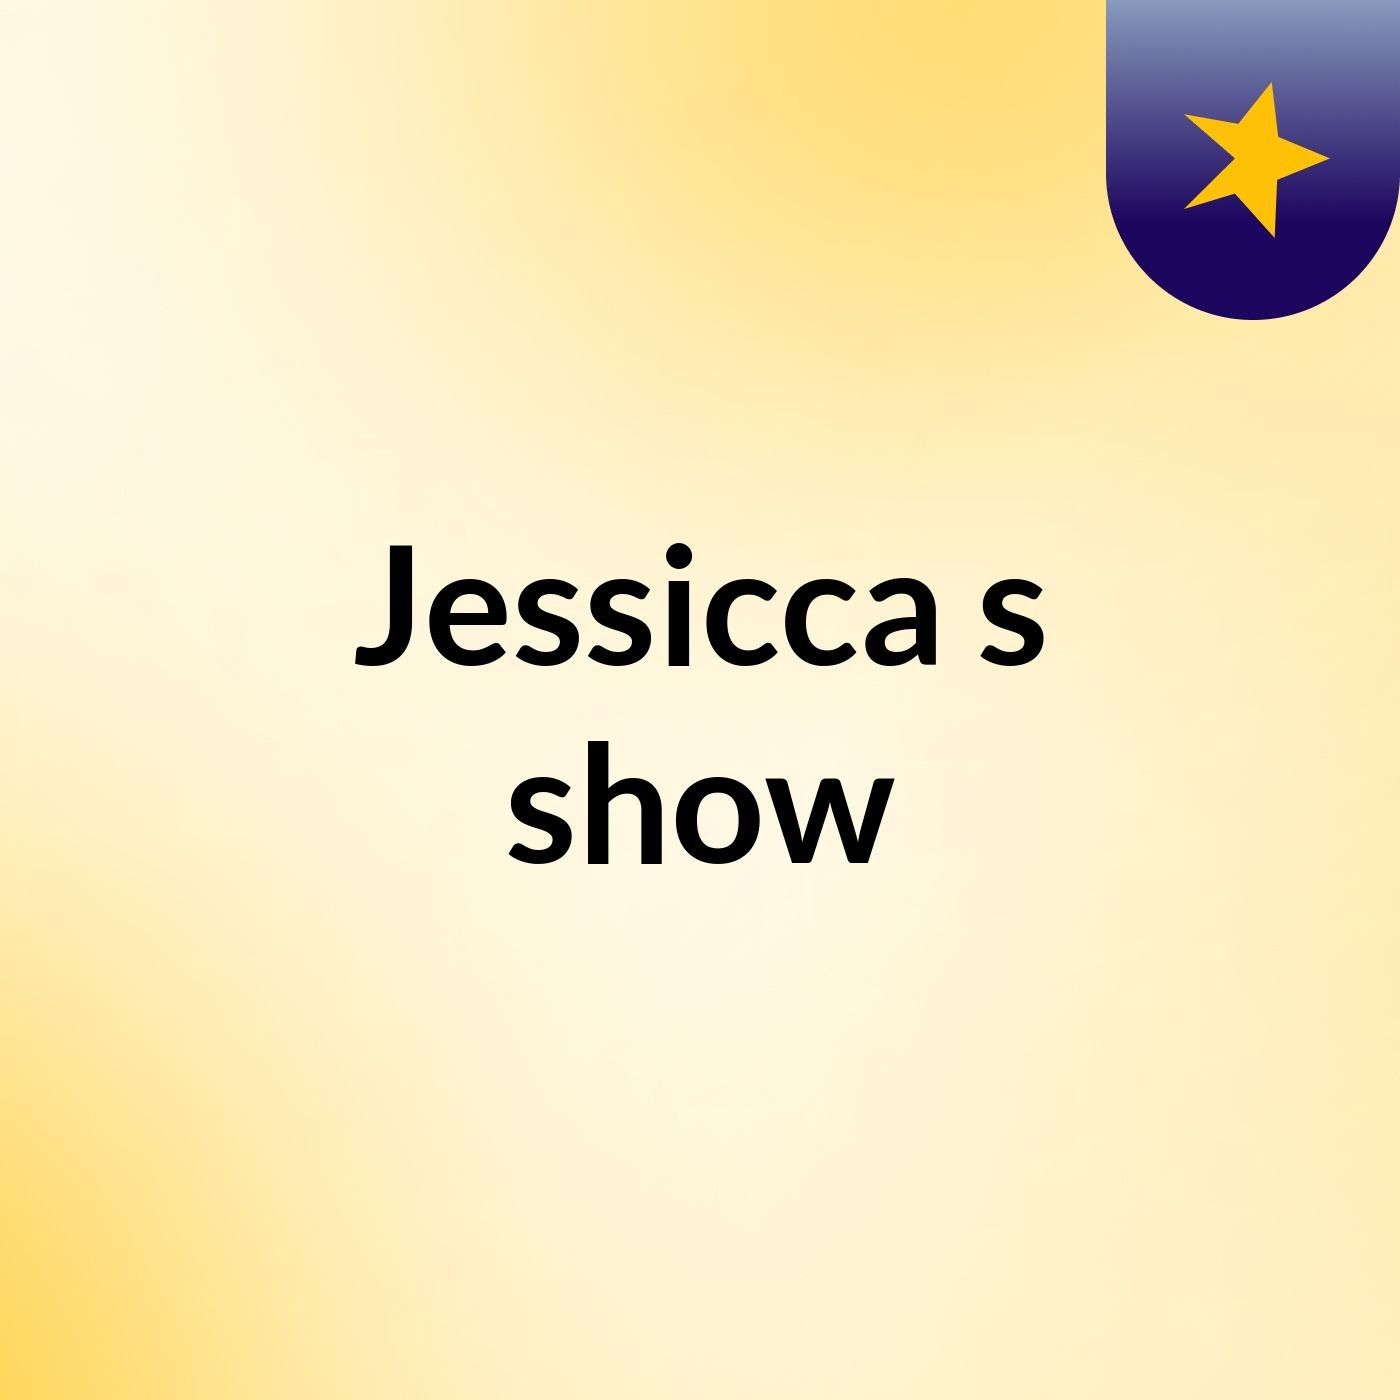 Jessicca's show